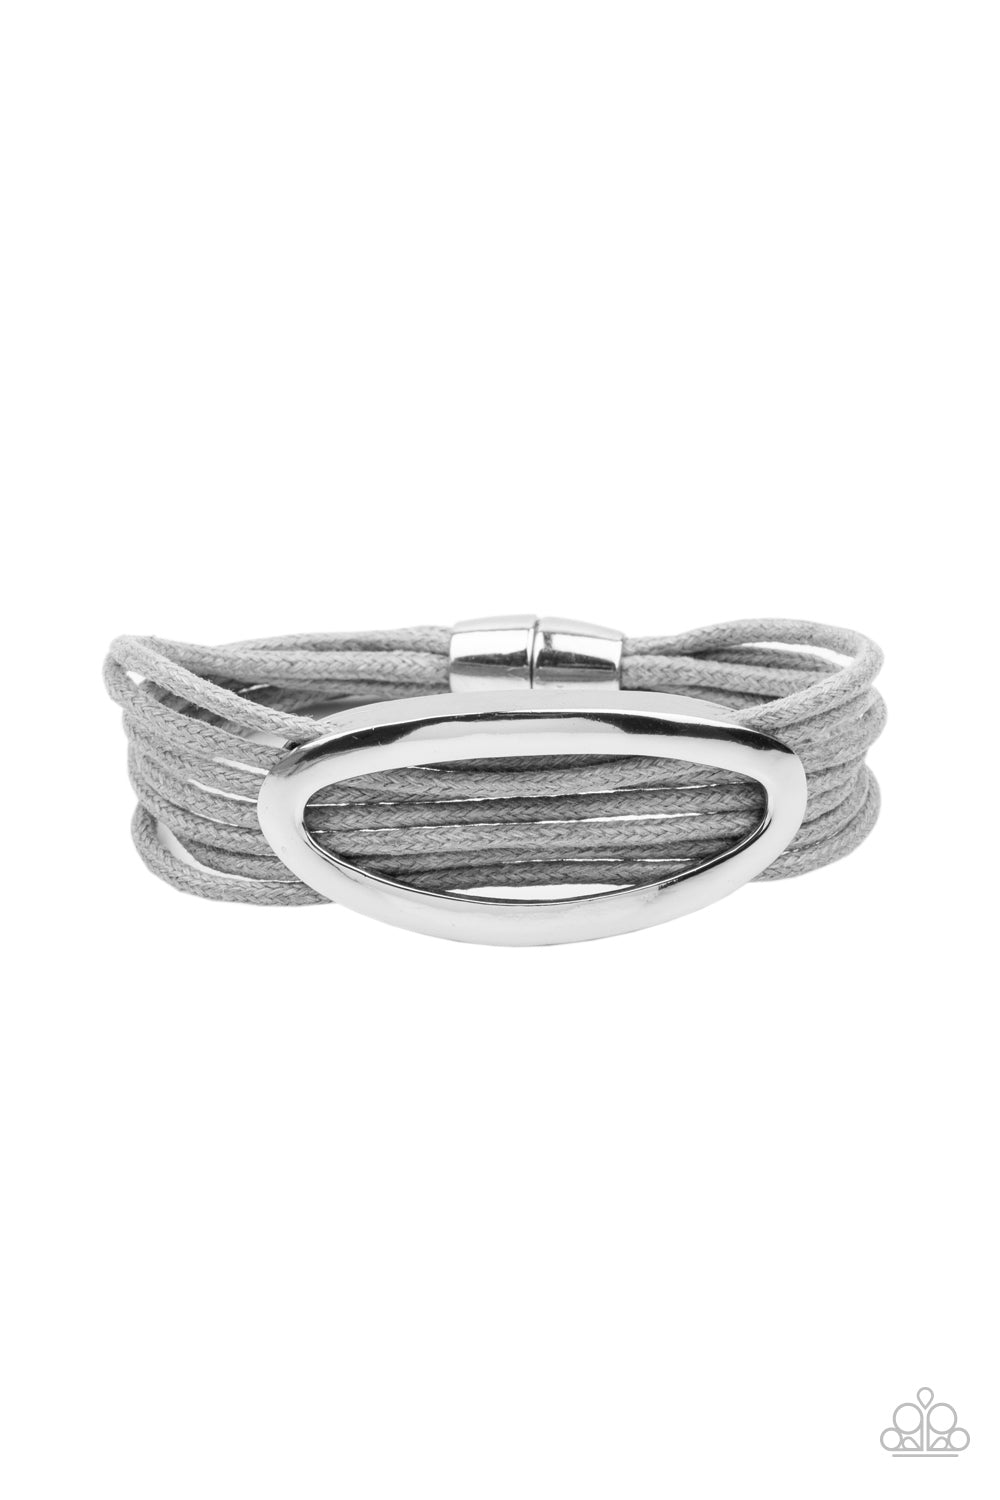 Paparazzi Accessories - Corded Couture #B489 - Silver Bracelet